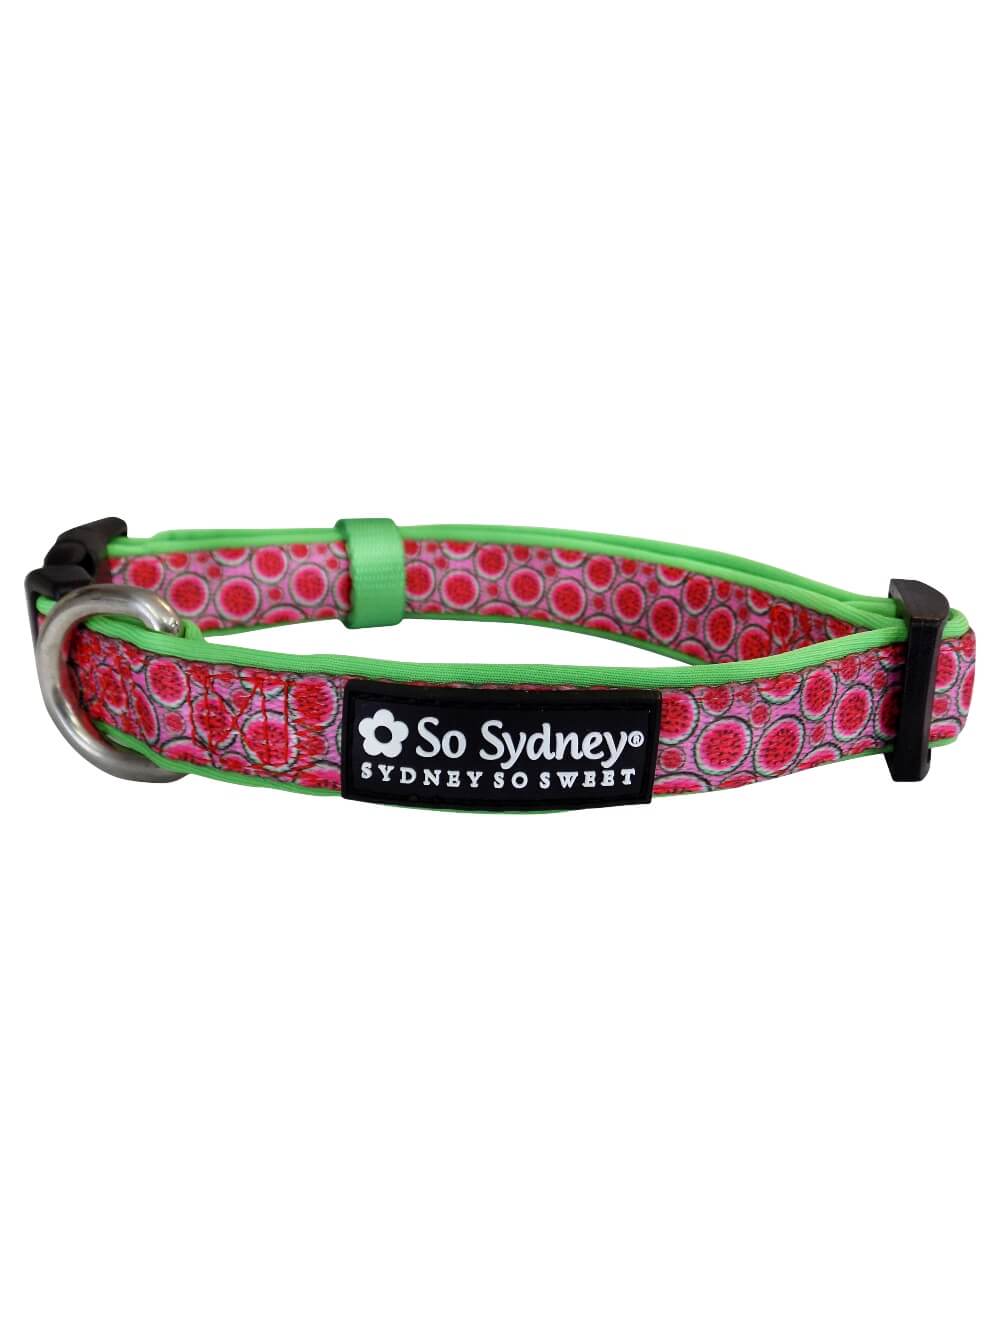 Watermelon Sugar Pink & Green Fun Fashion Dog Collar - Sydney So Sweet